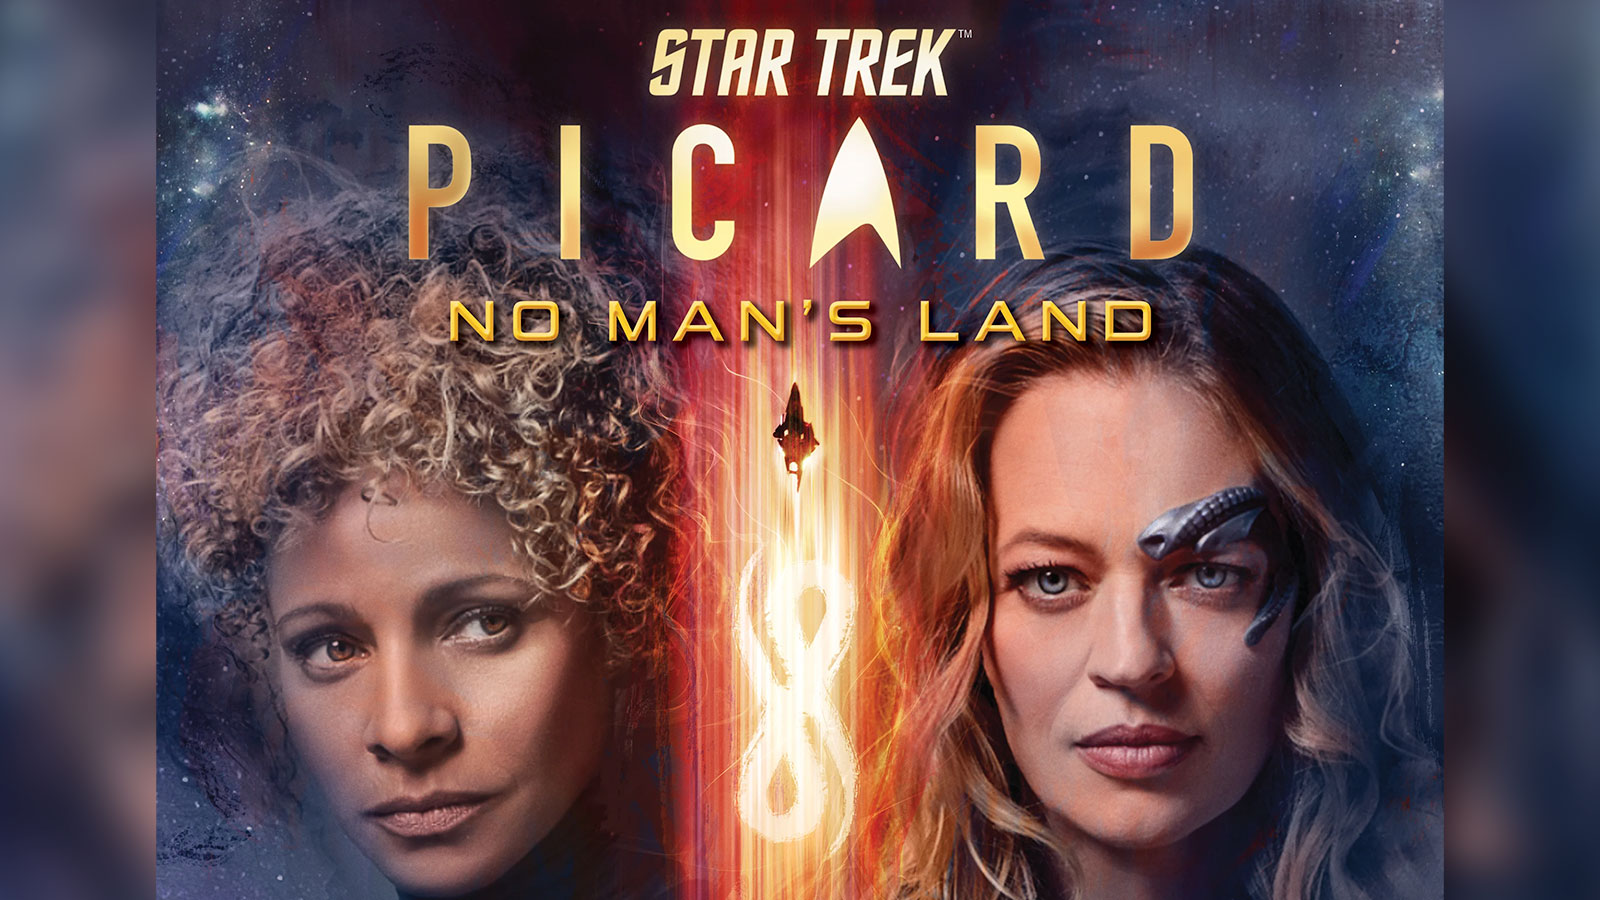 Star Trek: Picard Audio Drama Announced, Starring Jeri Ryan And Michelle Hurd